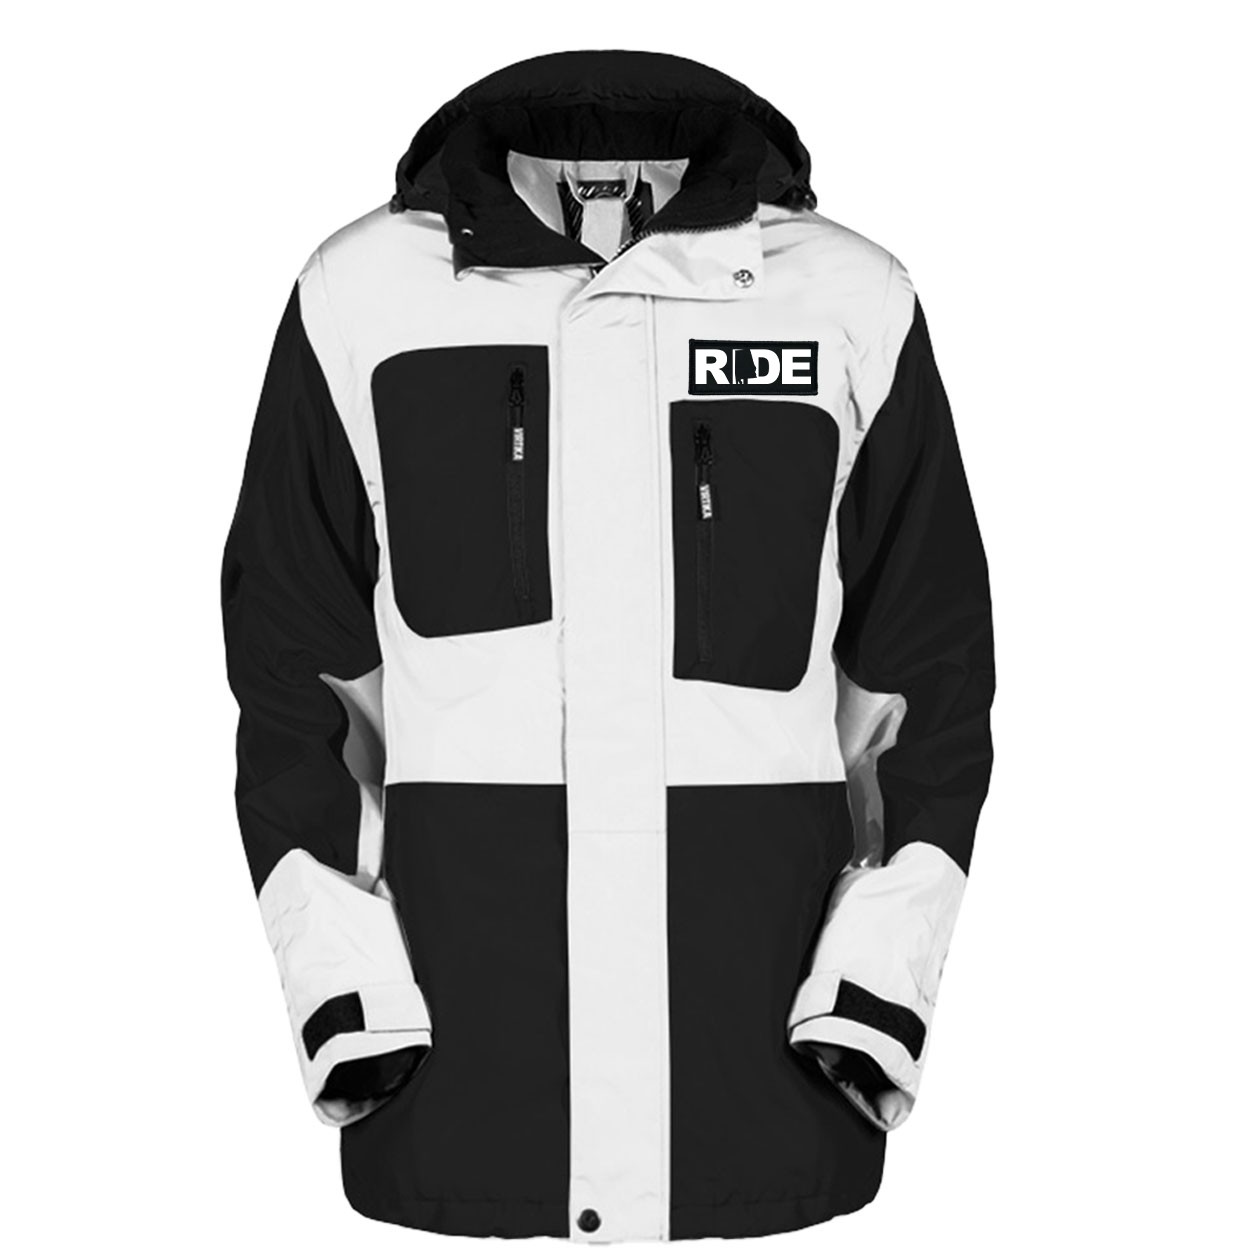 Ride Alabama Classic Woven Patch Pro Snowboard Jacket (Black/White)